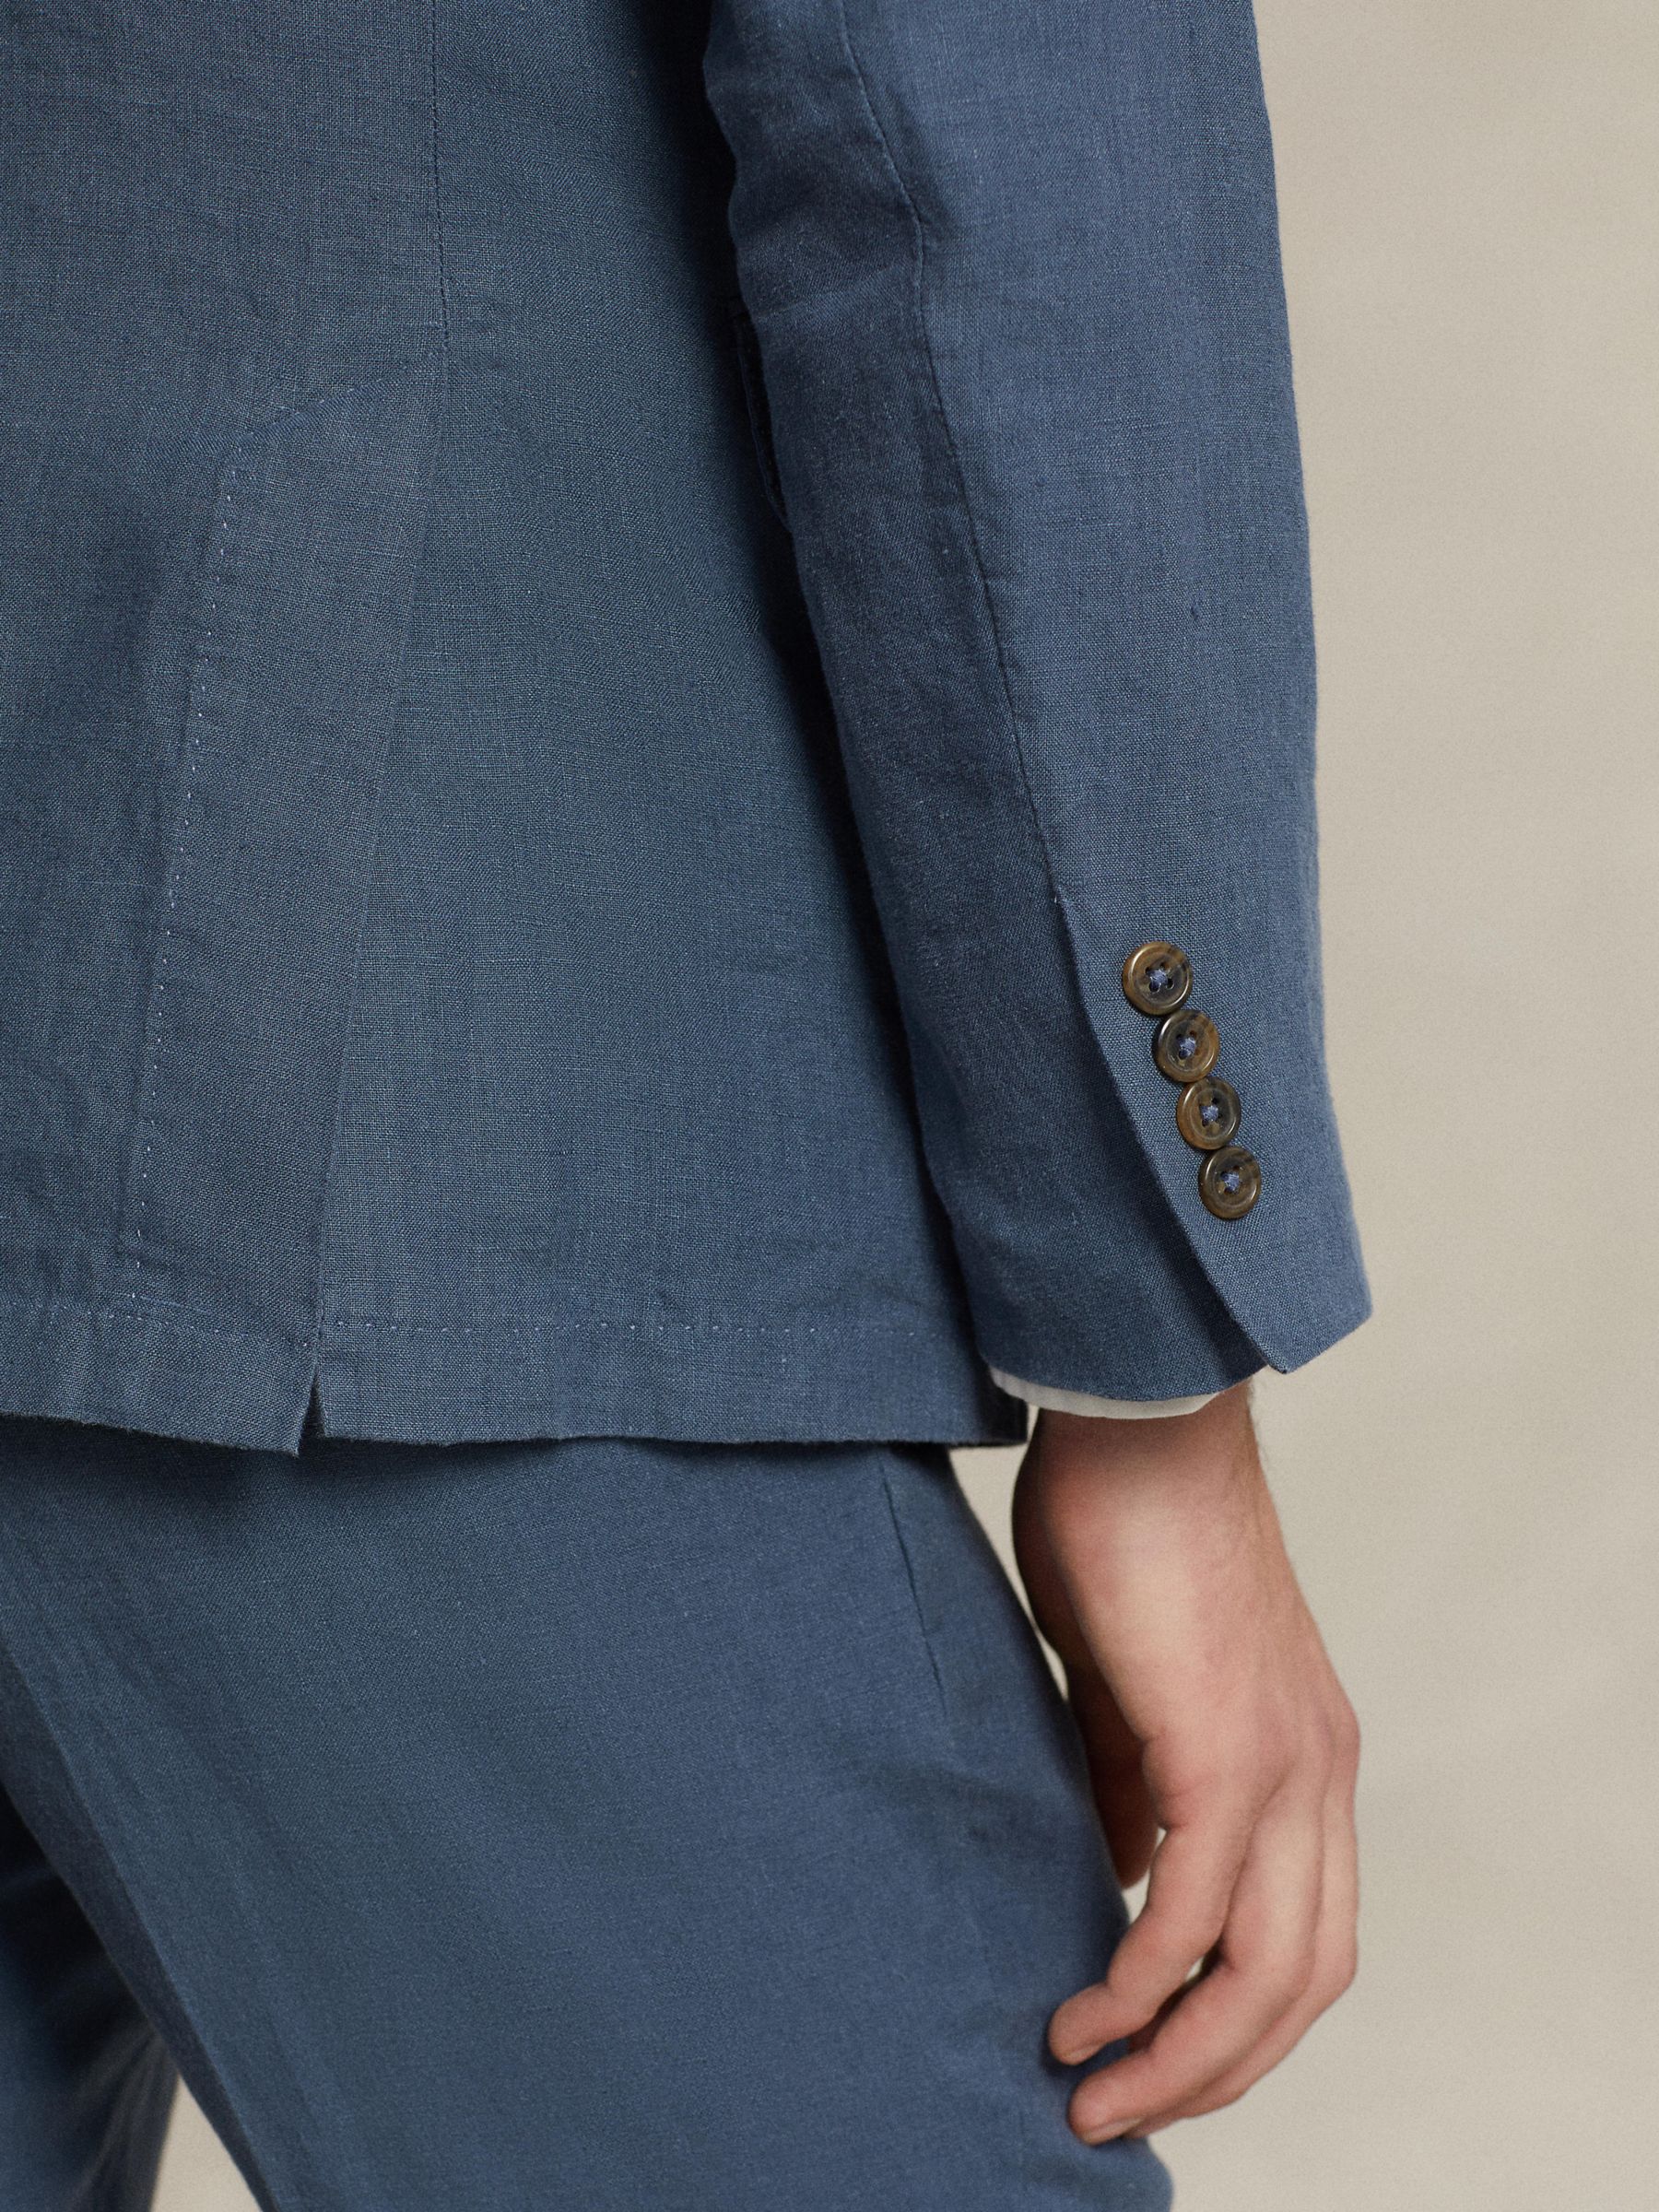 Ralph Lauren Polo Soft Modern Linen Suit Jacket, Corsair Blue, 46R